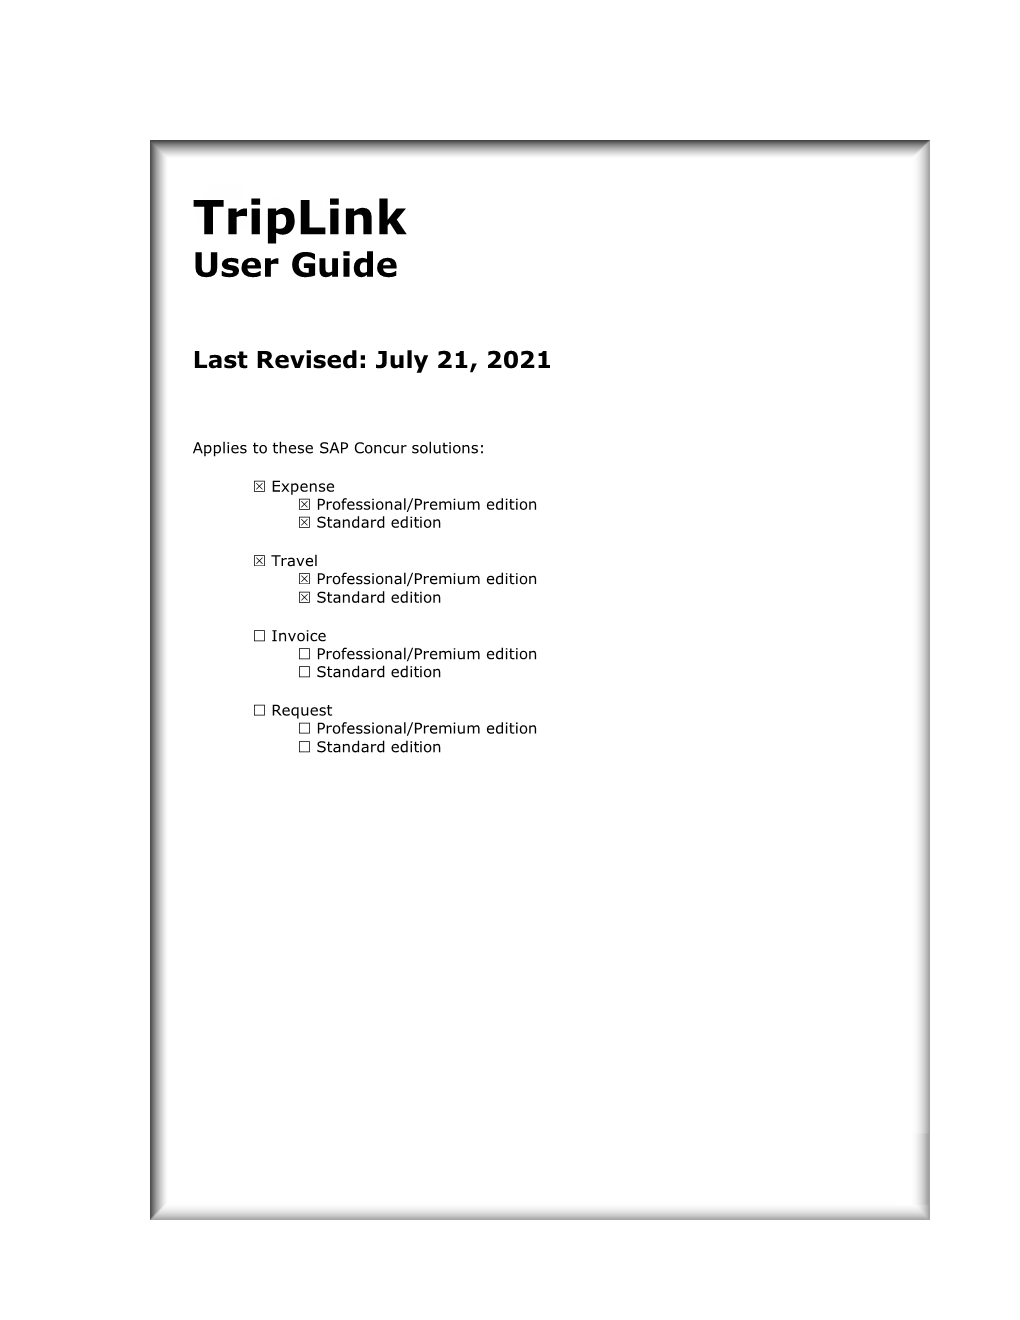 Triplink: User Guide Professional and Standard